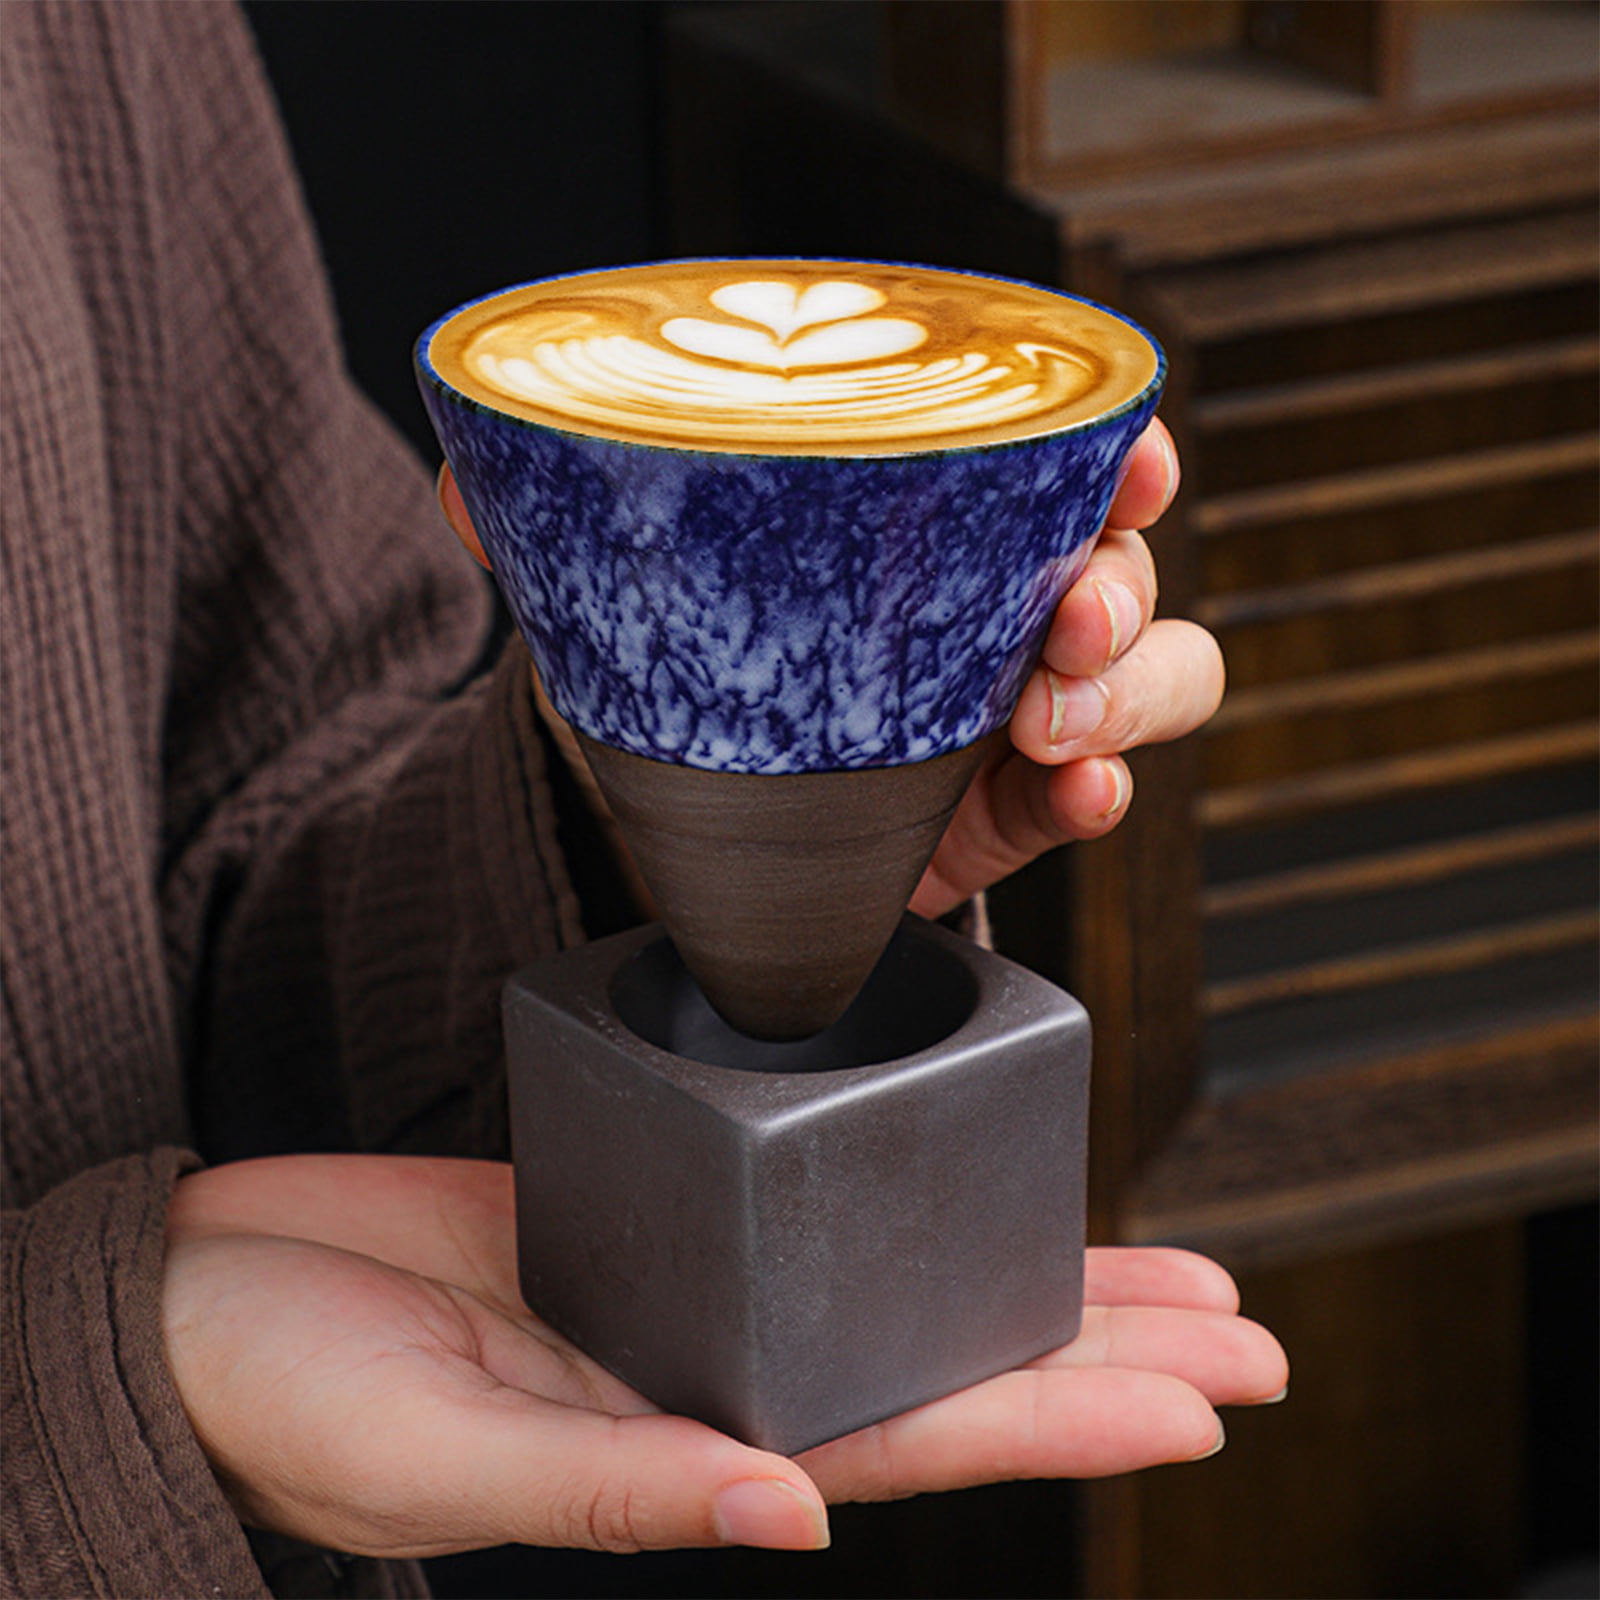 Teocera Black Multi Color Latte Mugs Set of 4-16 oz Porcelain Coffee Cups  with Handle, Large Cappucc…See more Teocera Black Multi Color Latte Mugs  Set